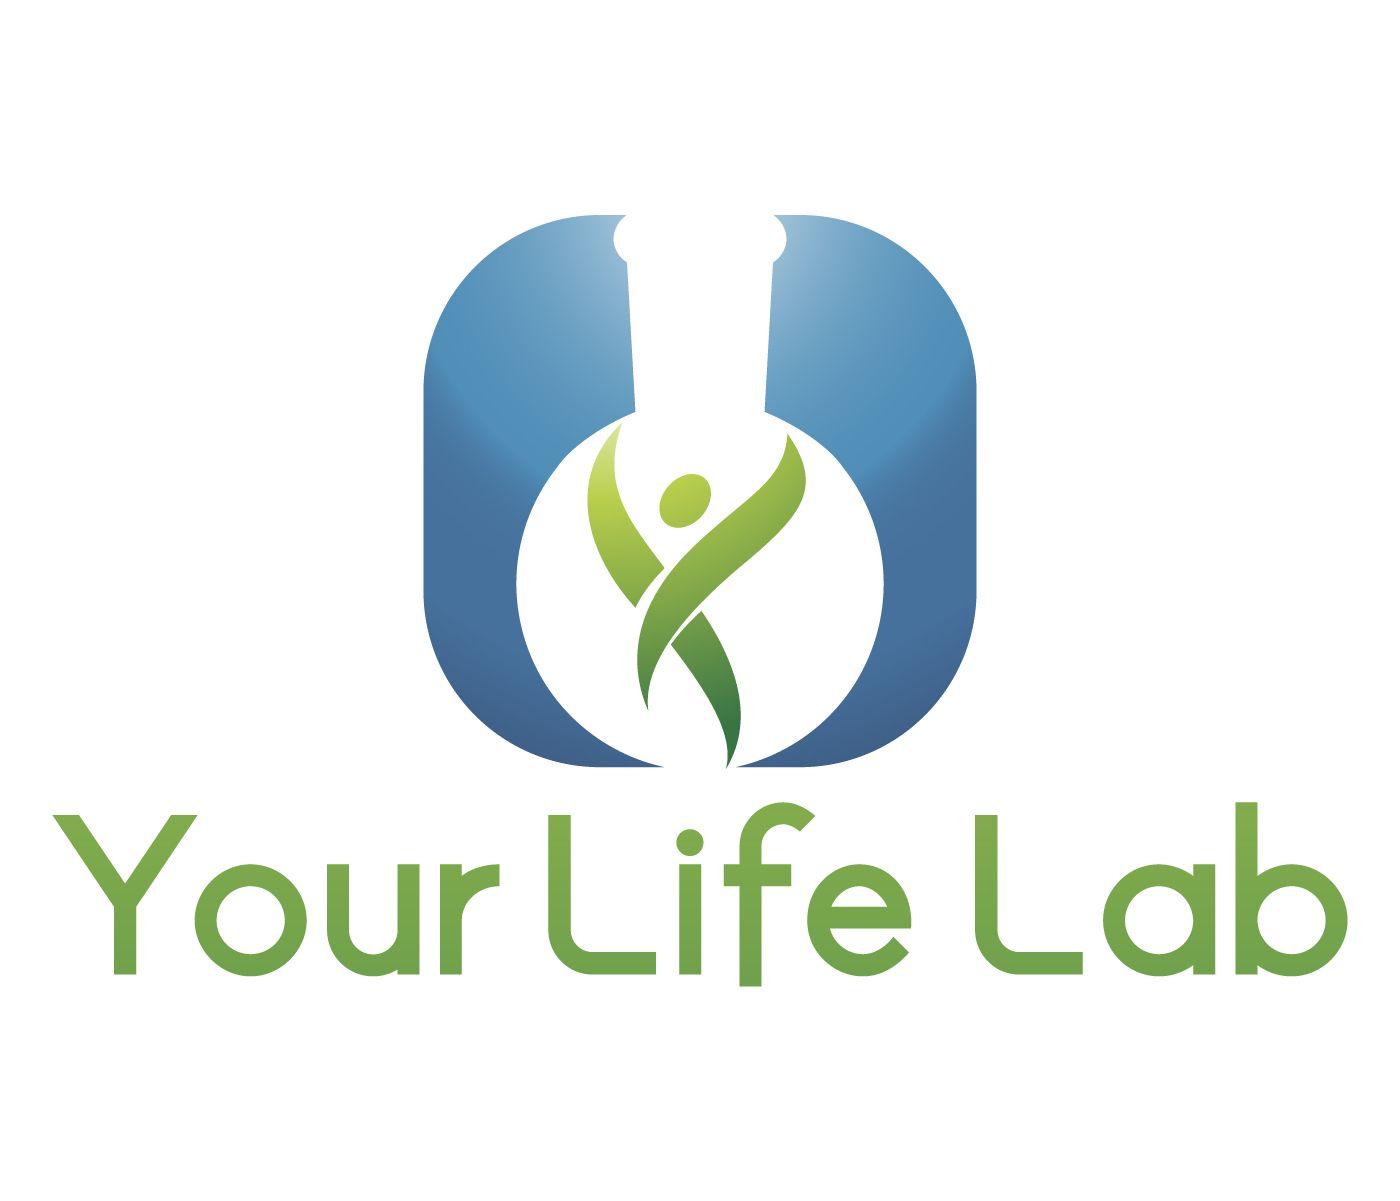 BV Logo - Modern, Elegant Logo Design for Your Life Lab by Design Ninja 47 ...